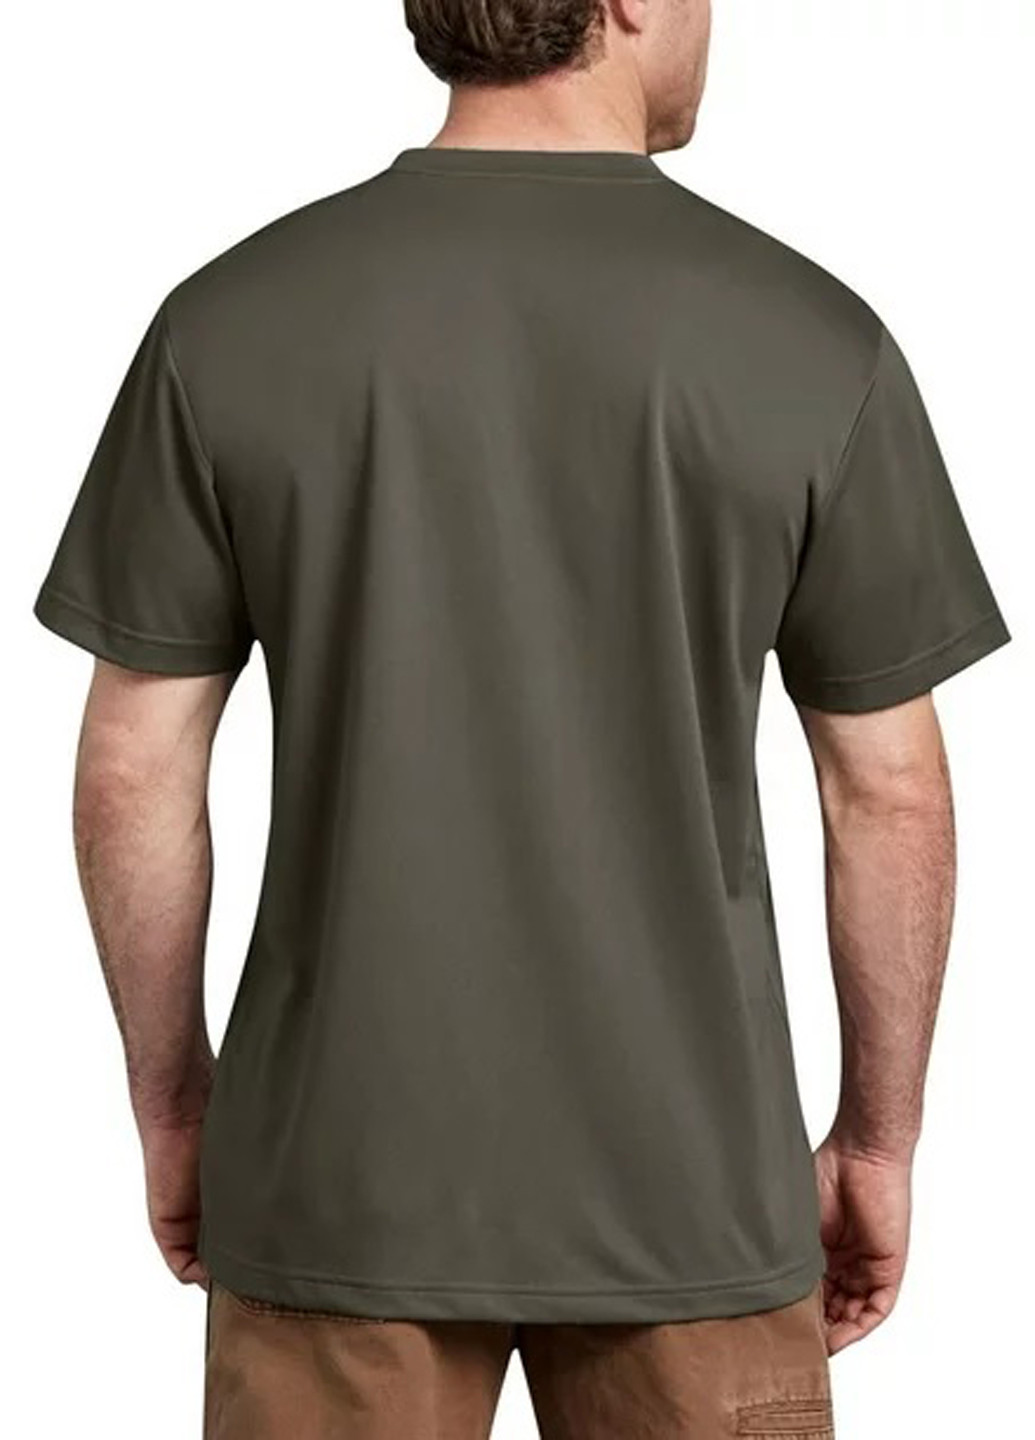 Хаки (оливковая) футболка Dickies